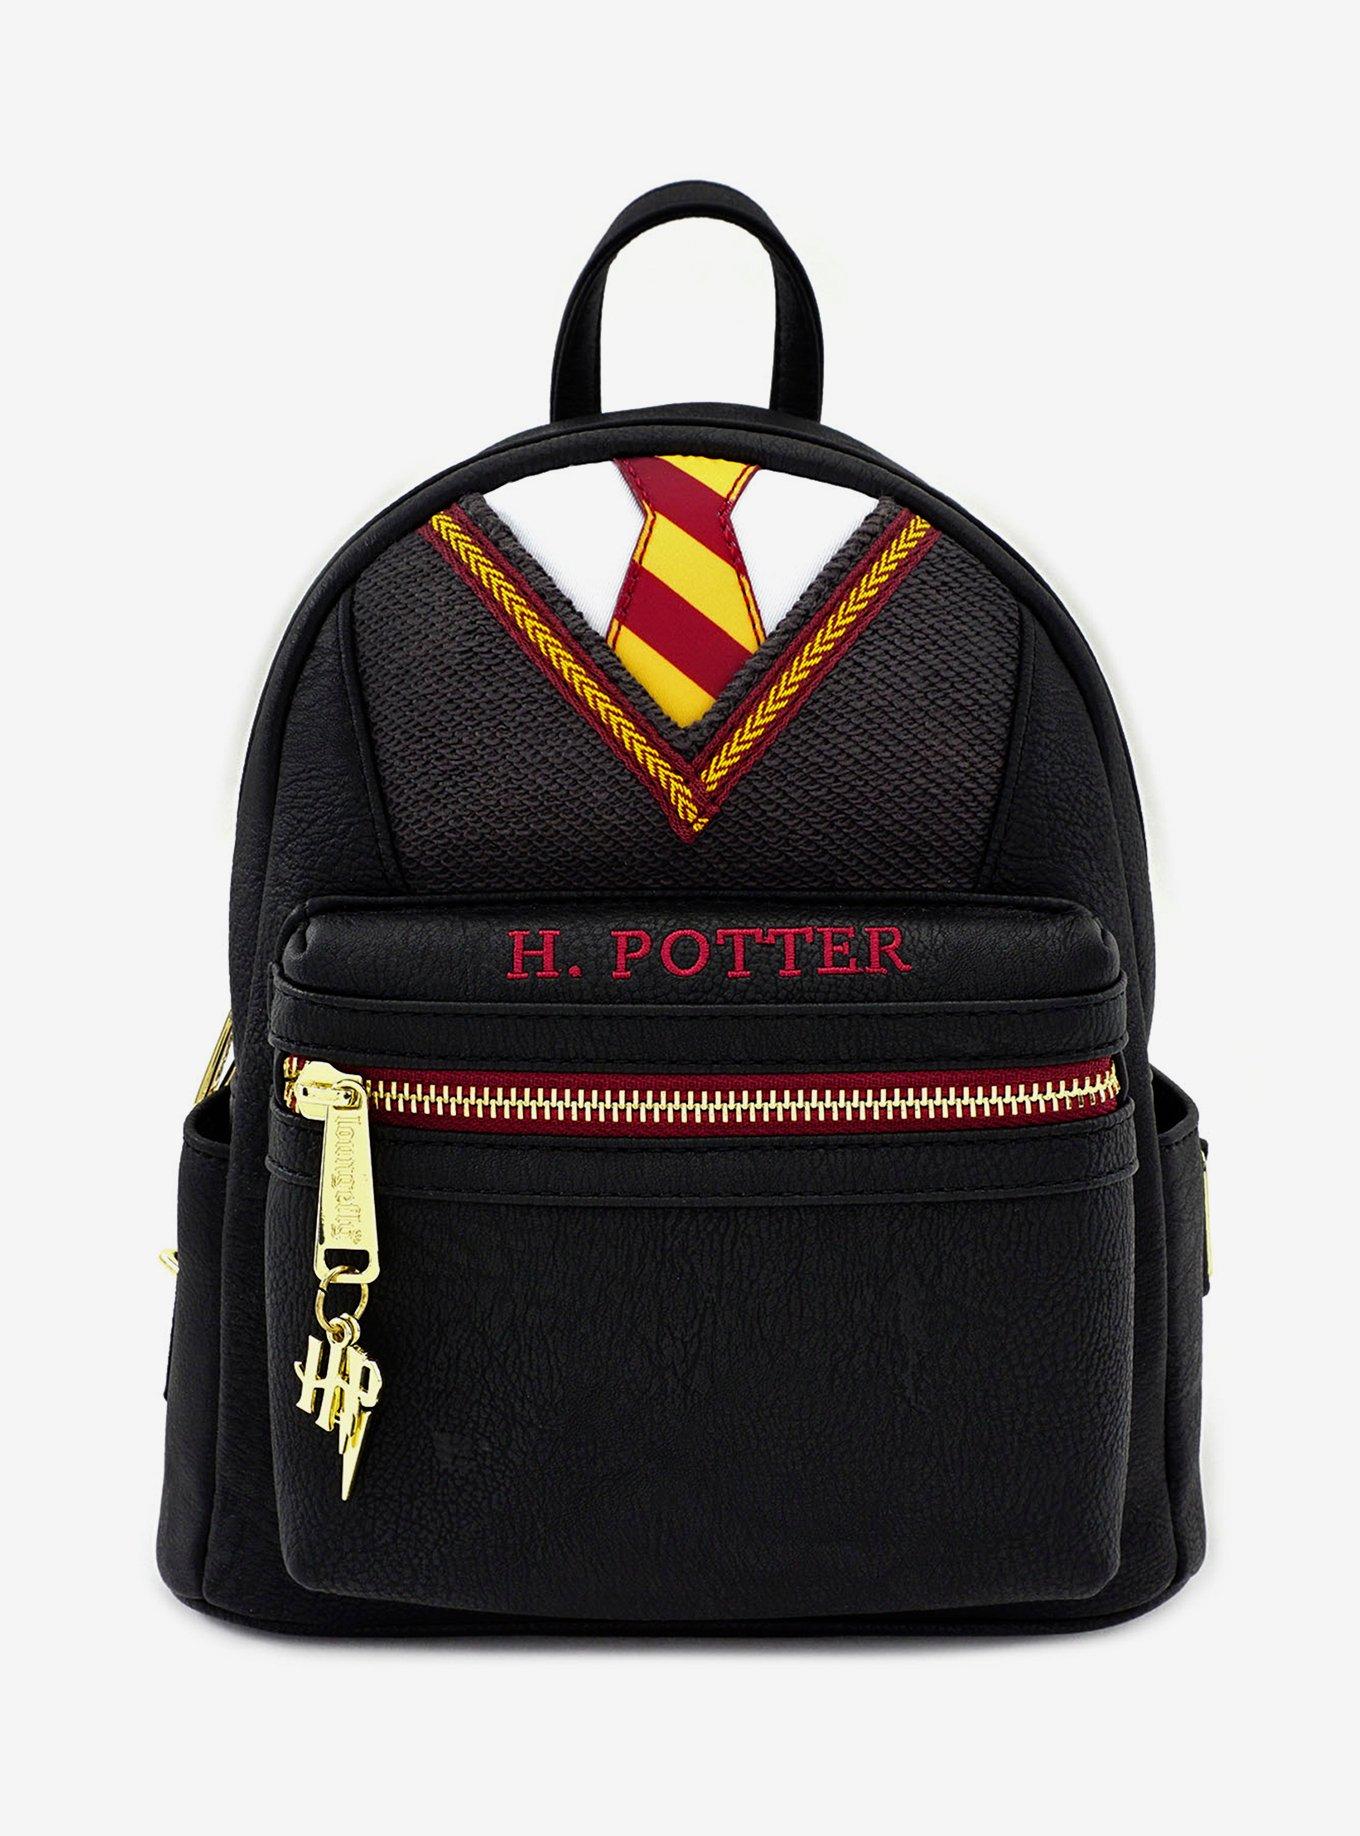 Loungefly Harry Potter Hogwarts Castle Fall Foliage Mini Backpack